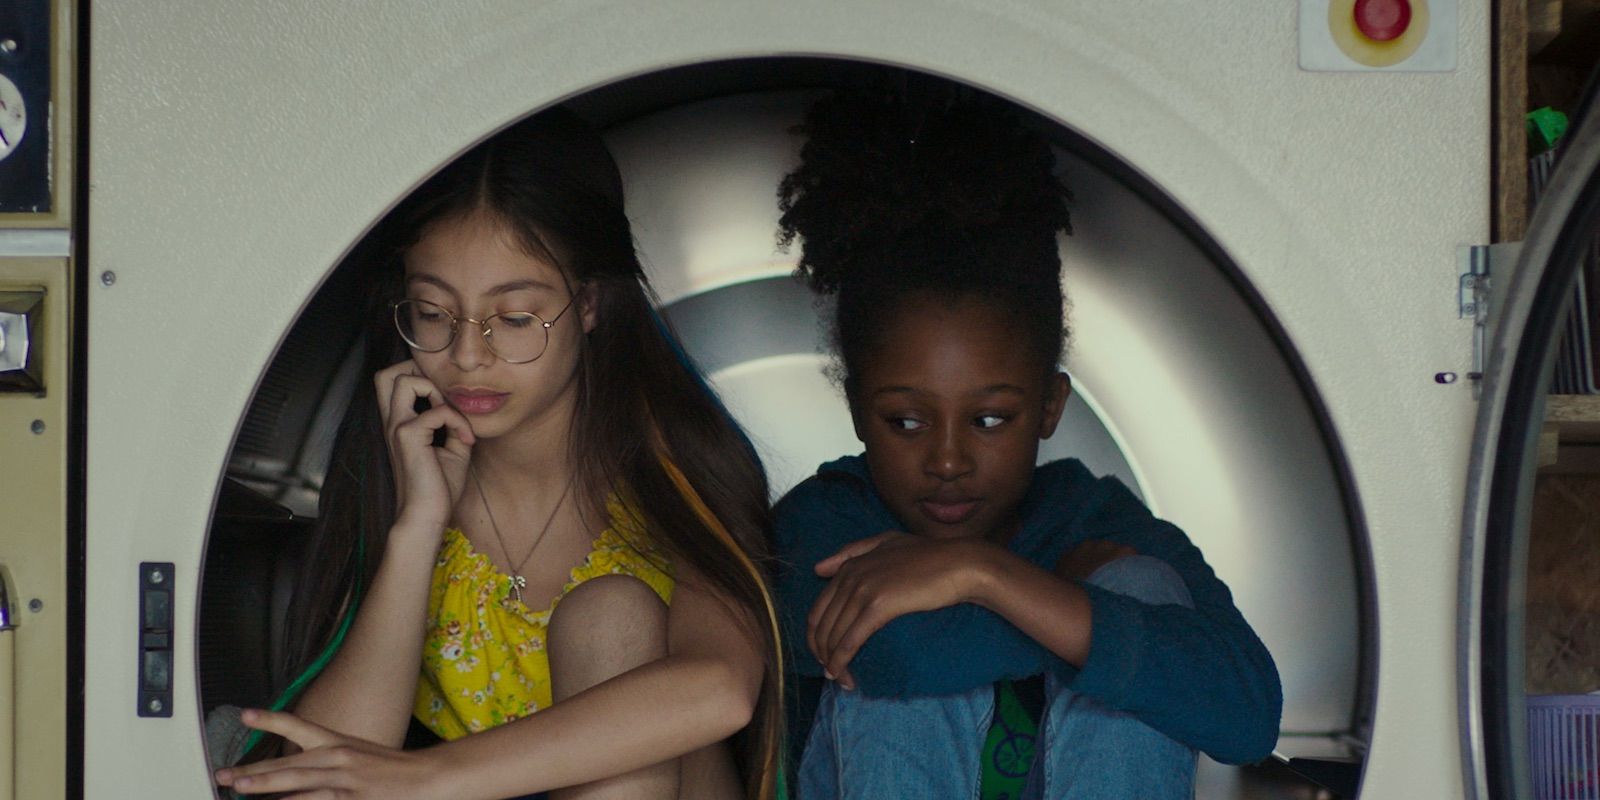 two girls sitting inside what looks like a dryer in Cuties